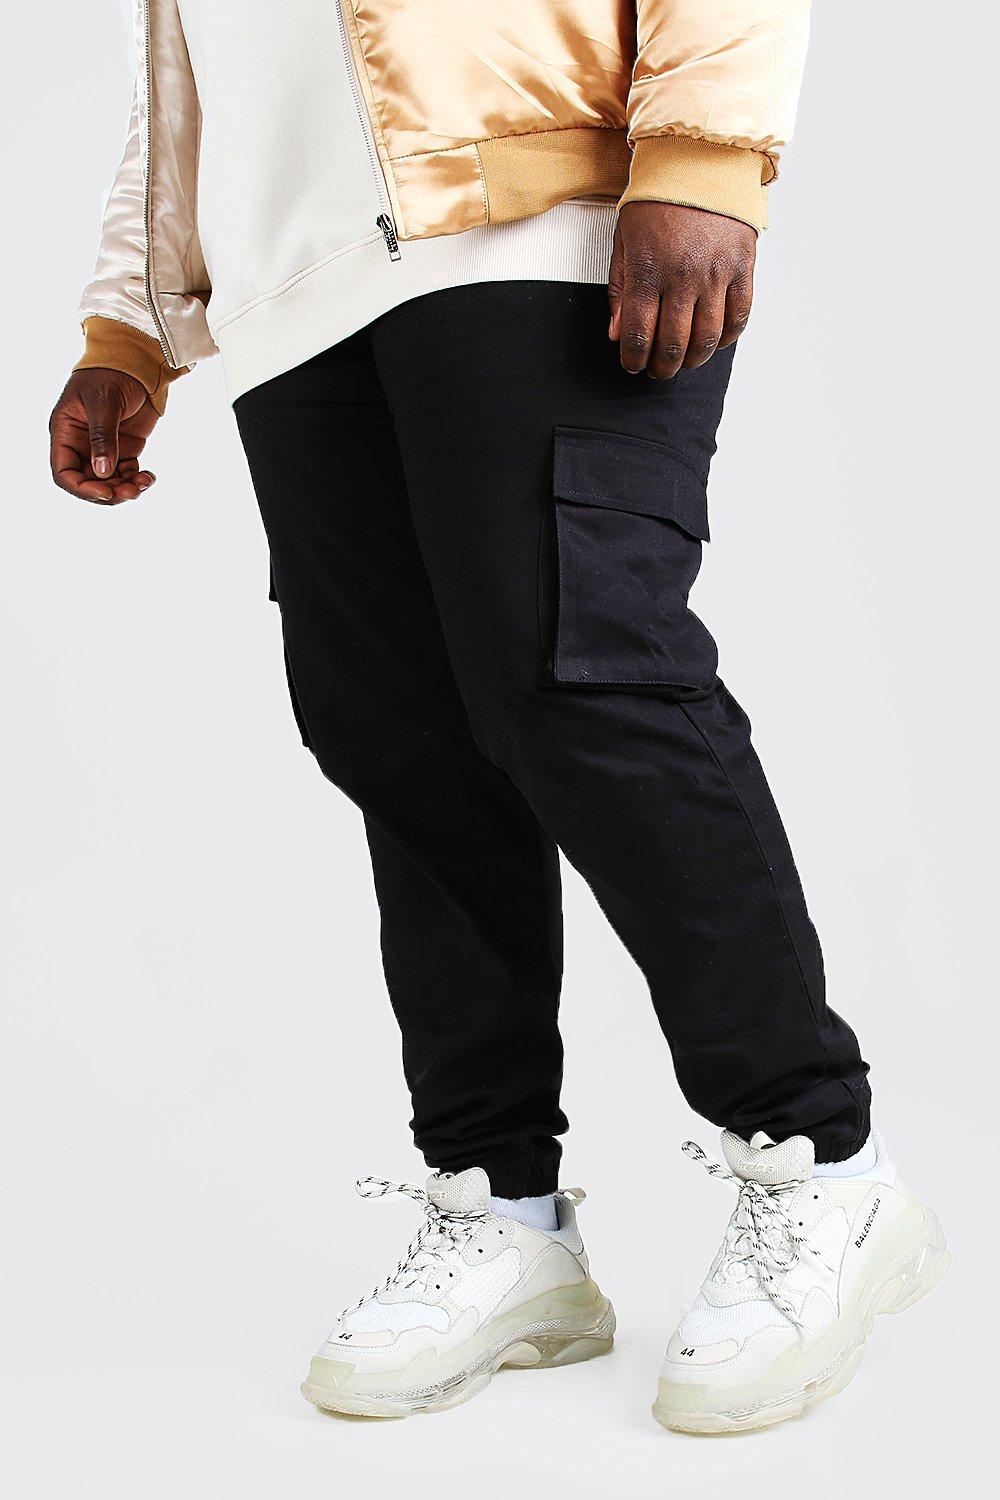 BU2H Men Multi-Pockets Utility Big /& Tall Baggy Cargo Jogger Pants Trousers